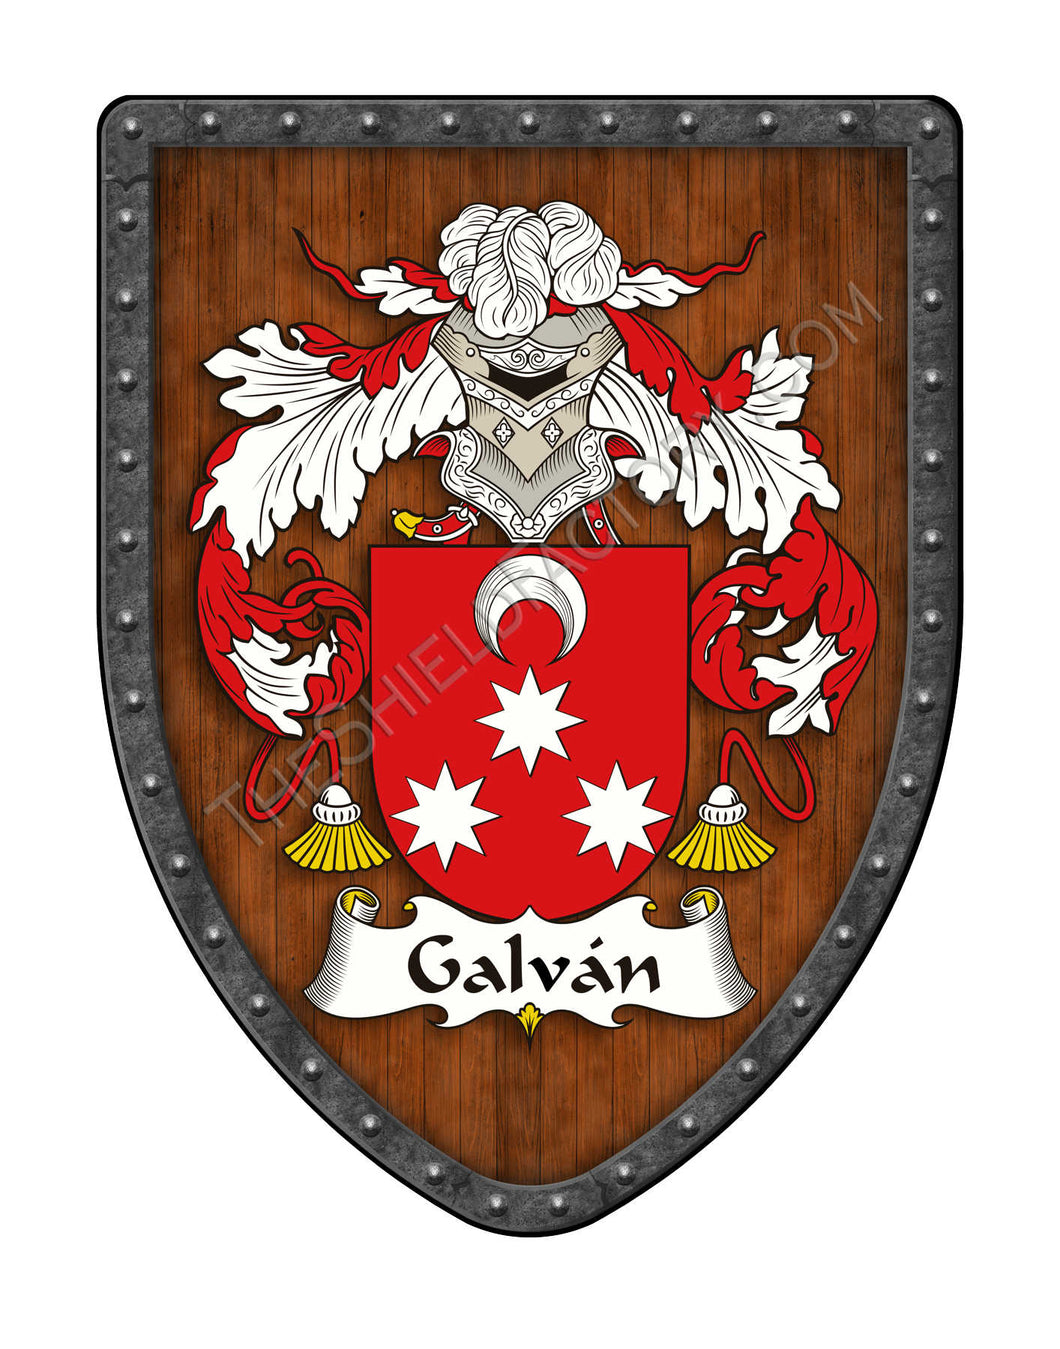 Galván Coat of Arms Shield